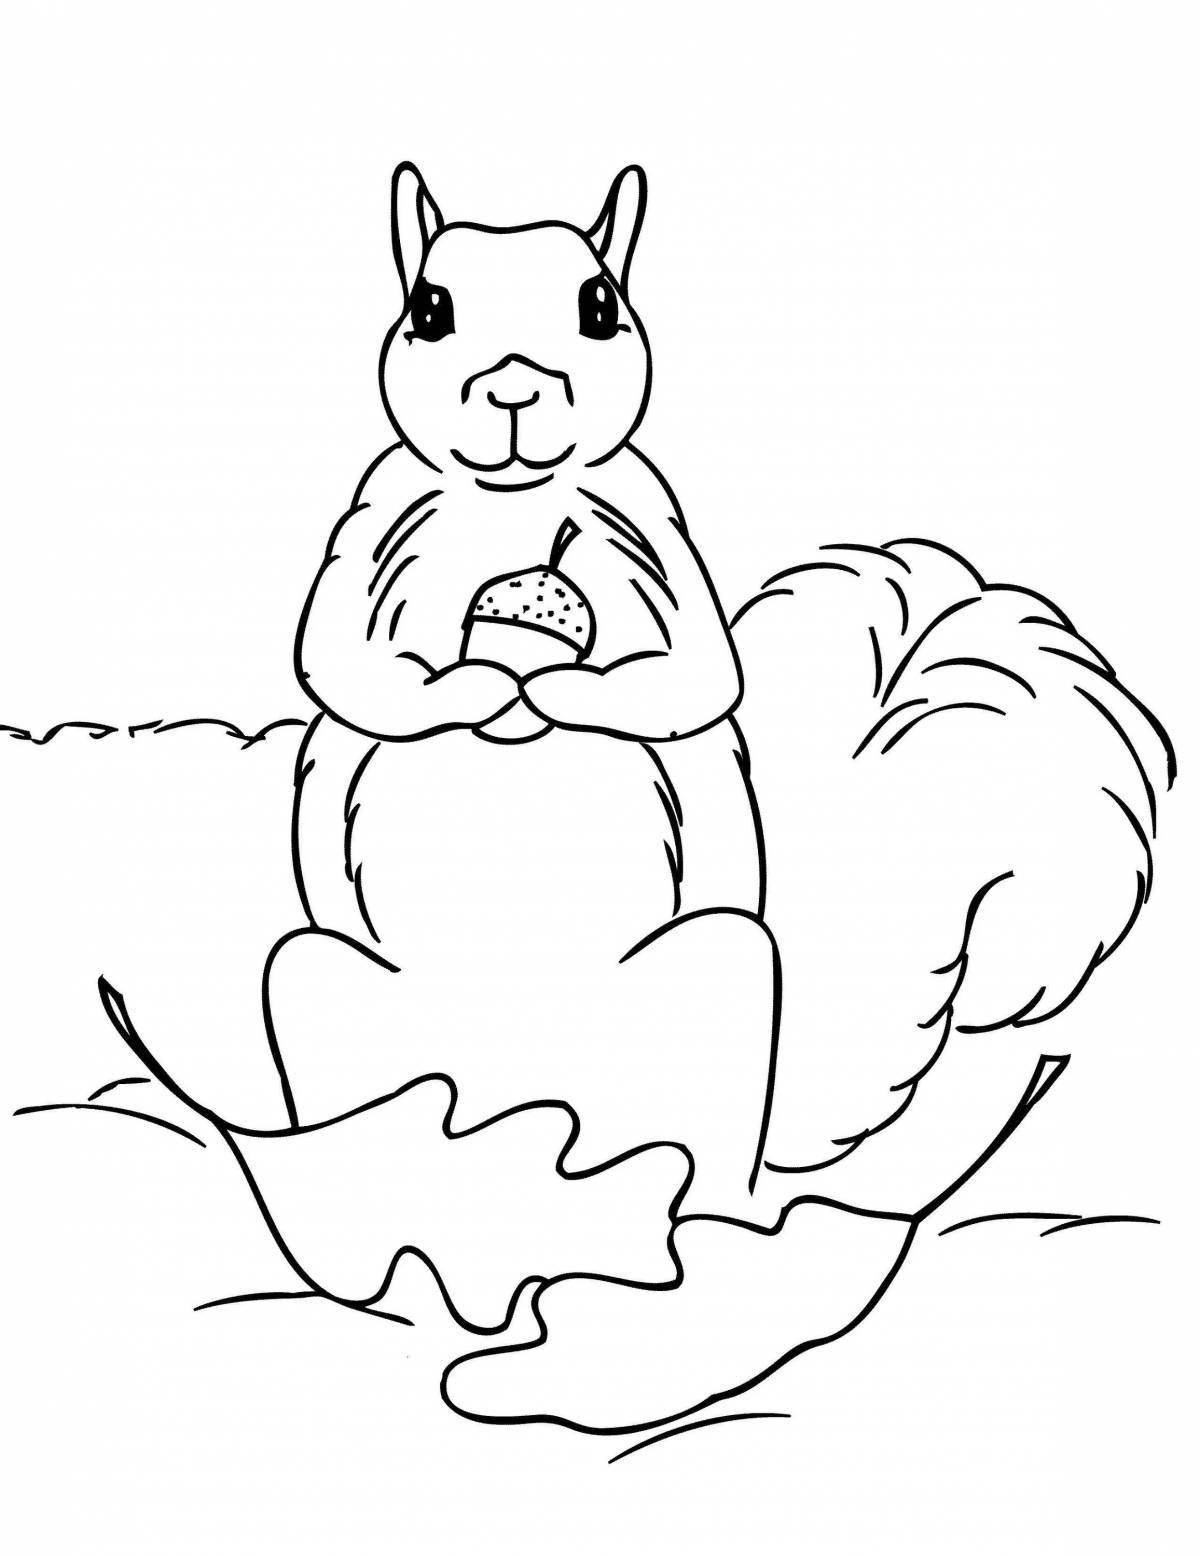 Animated squirrel coloring